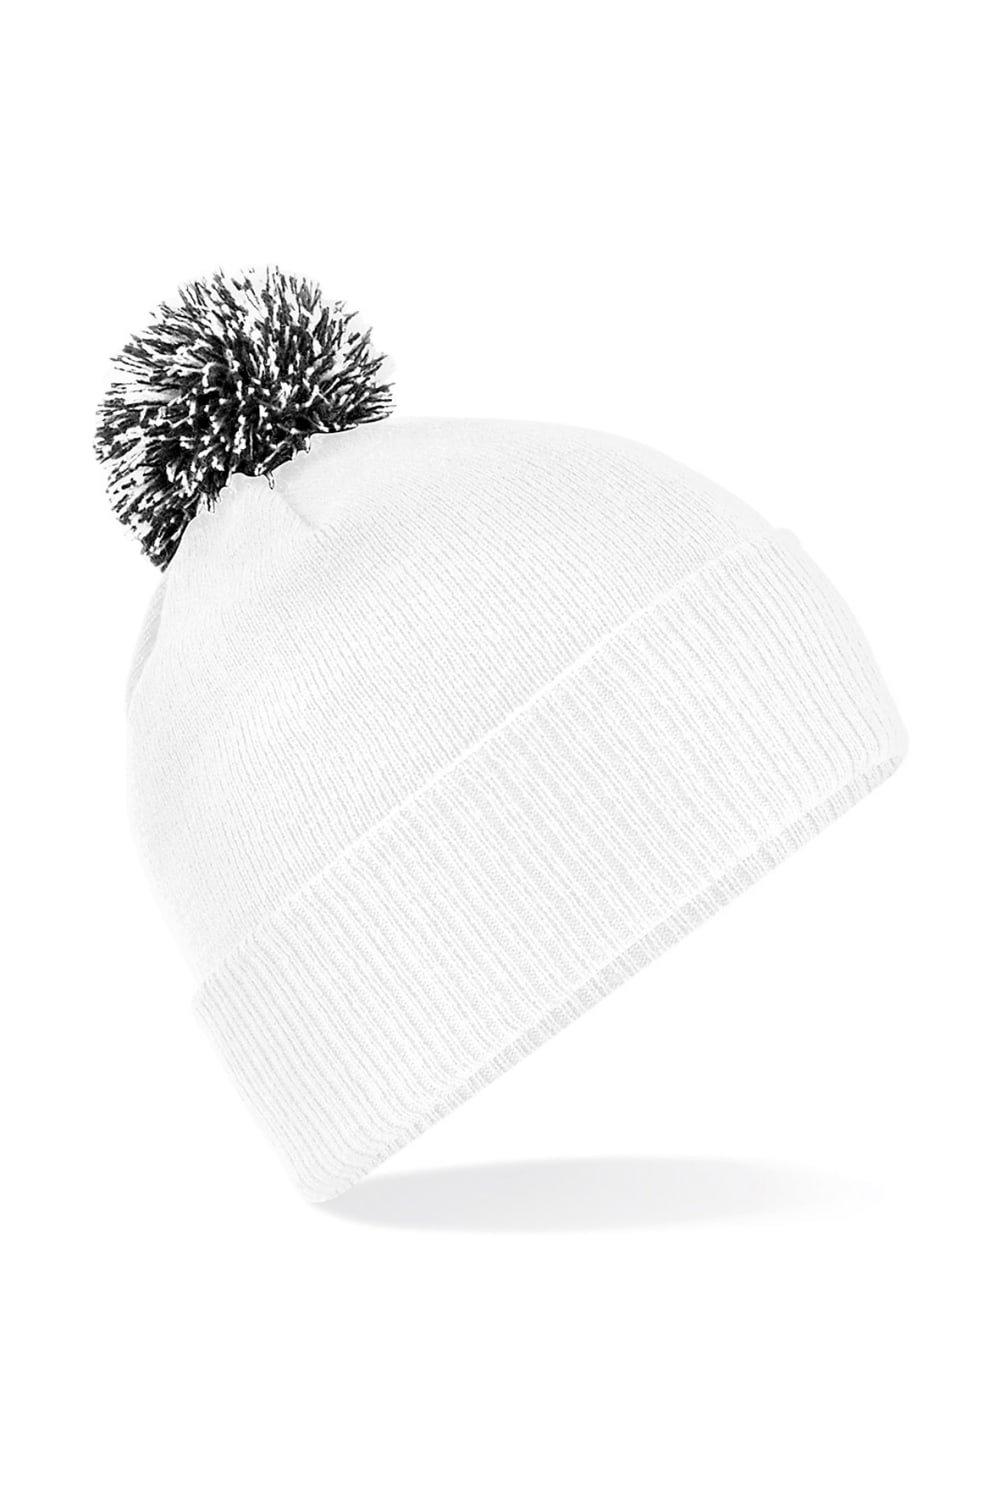 Зимняя шапка Snowstar Duo Extreme Beechfield, белый зимняя шапка snowstar duo extreme beechfield серый